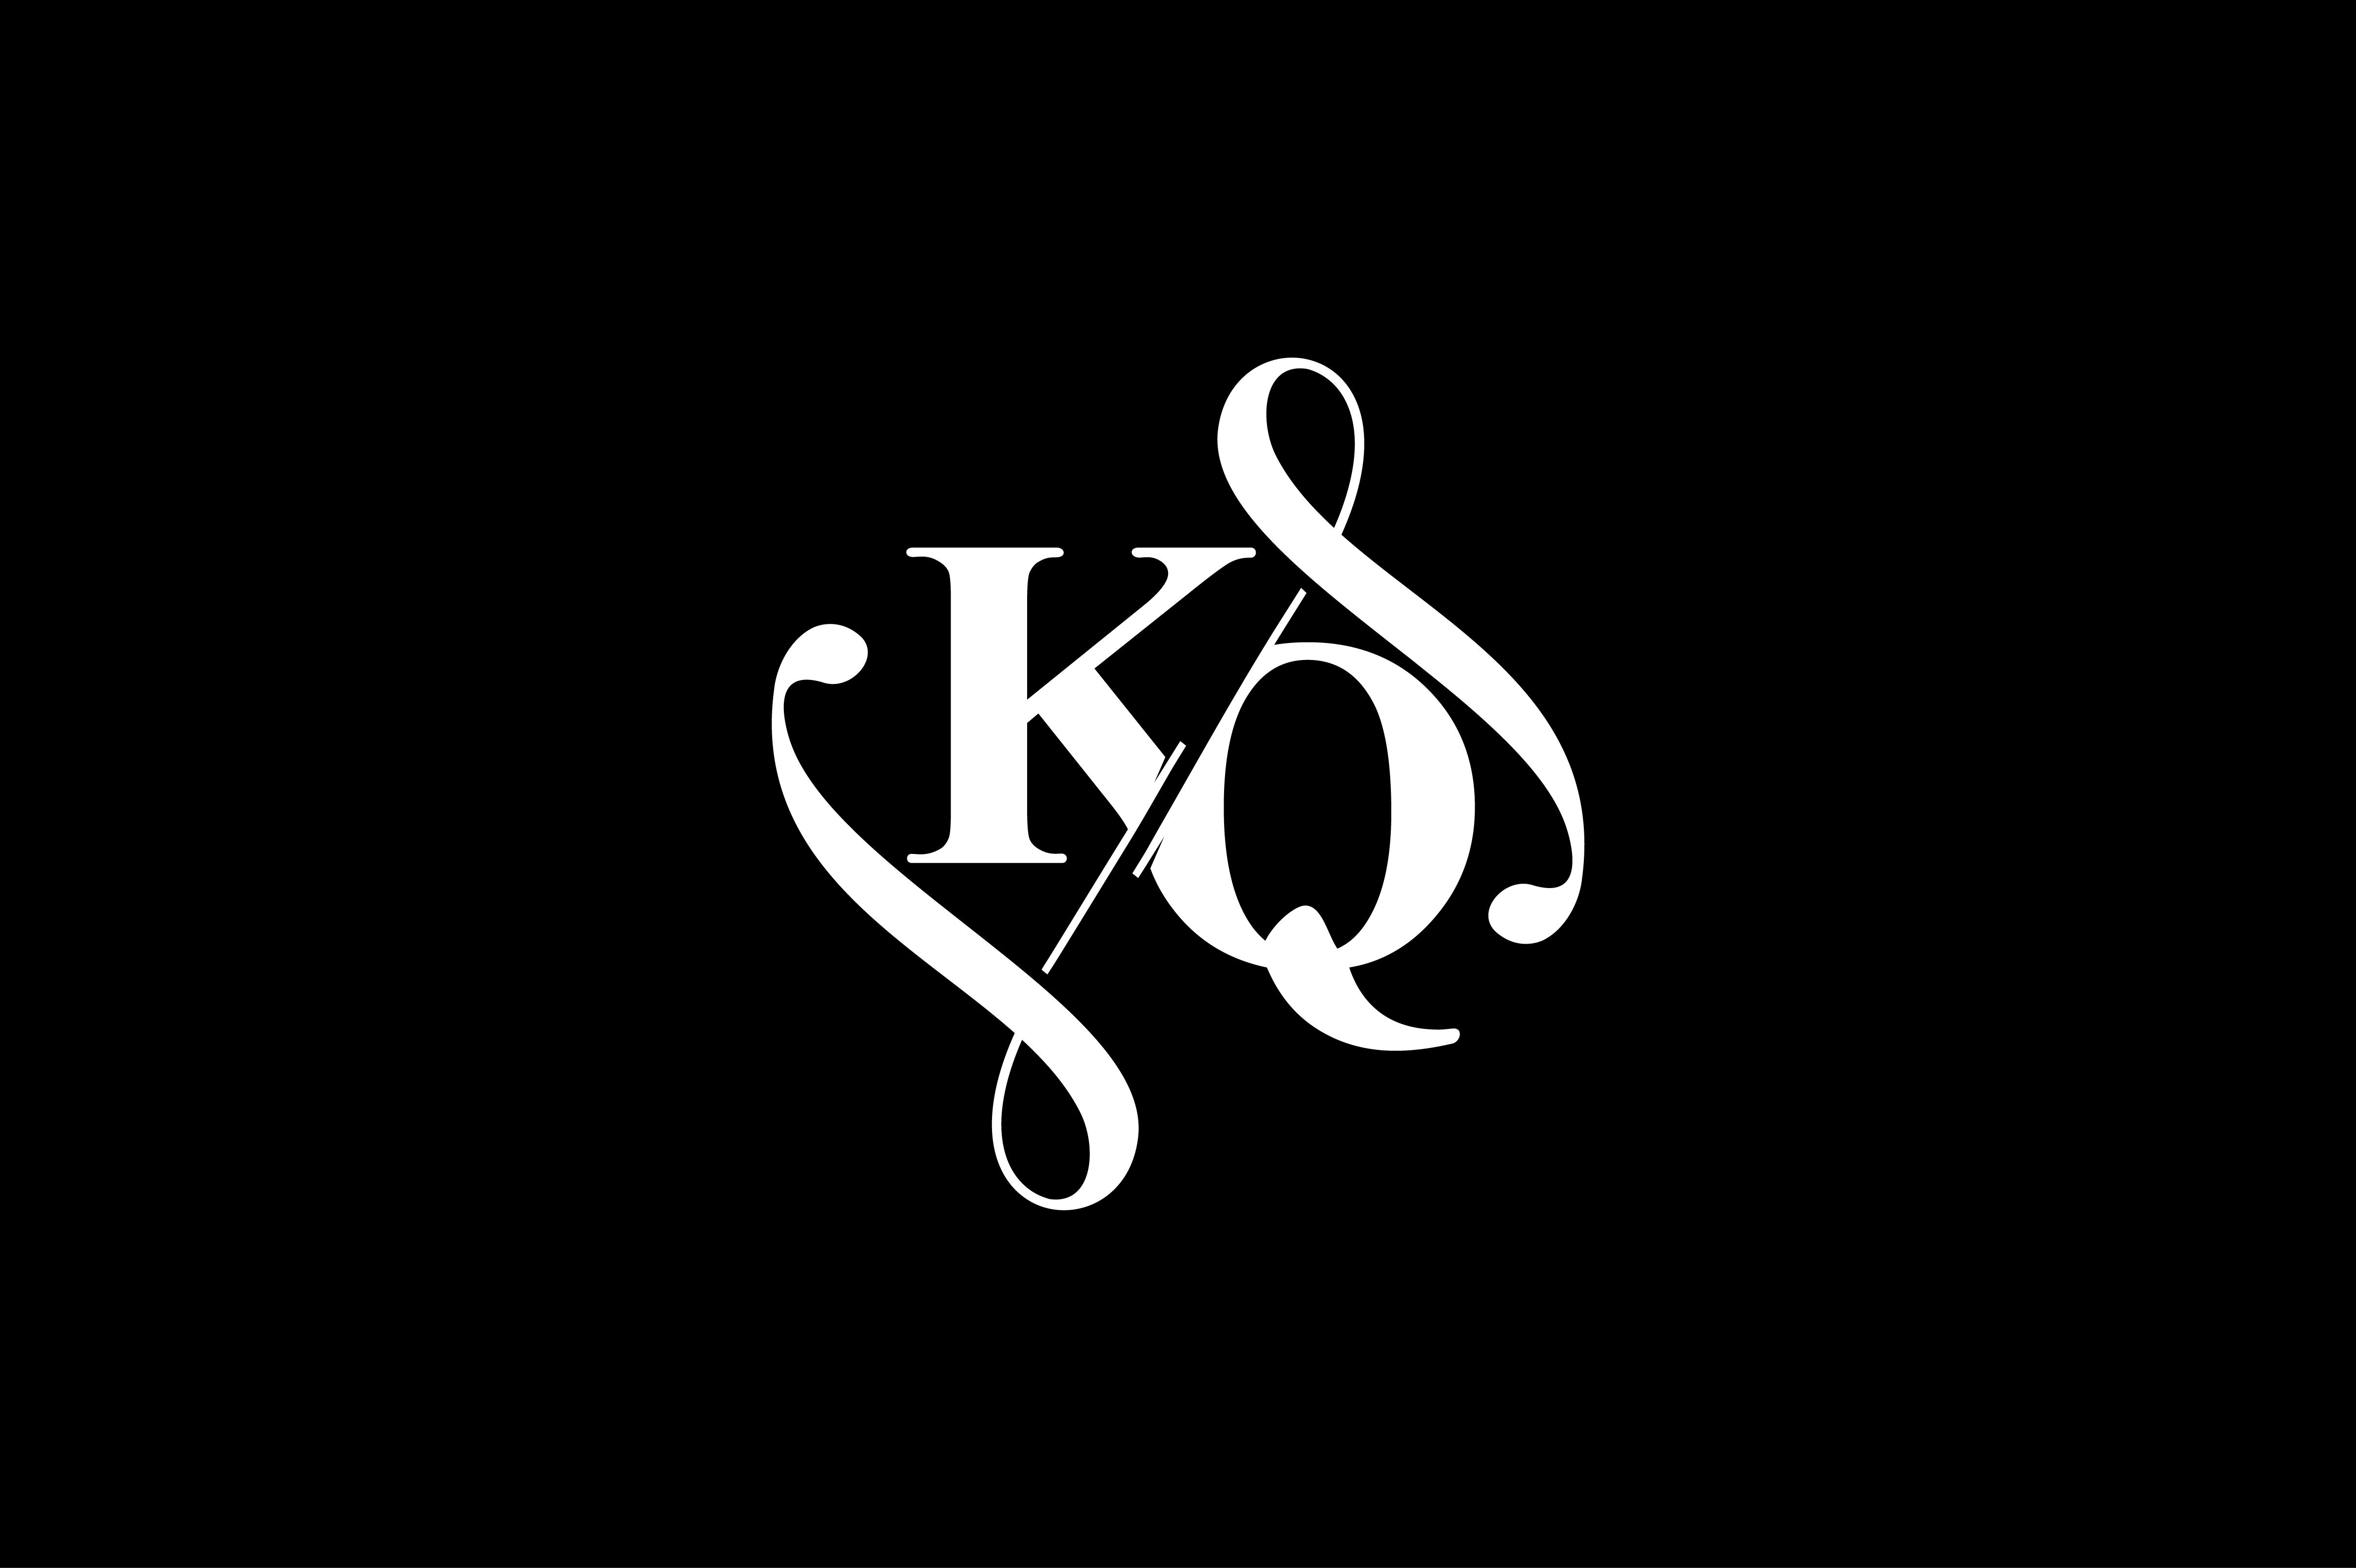 100+ Amazing One Letter Logos: Monogram Logo Design